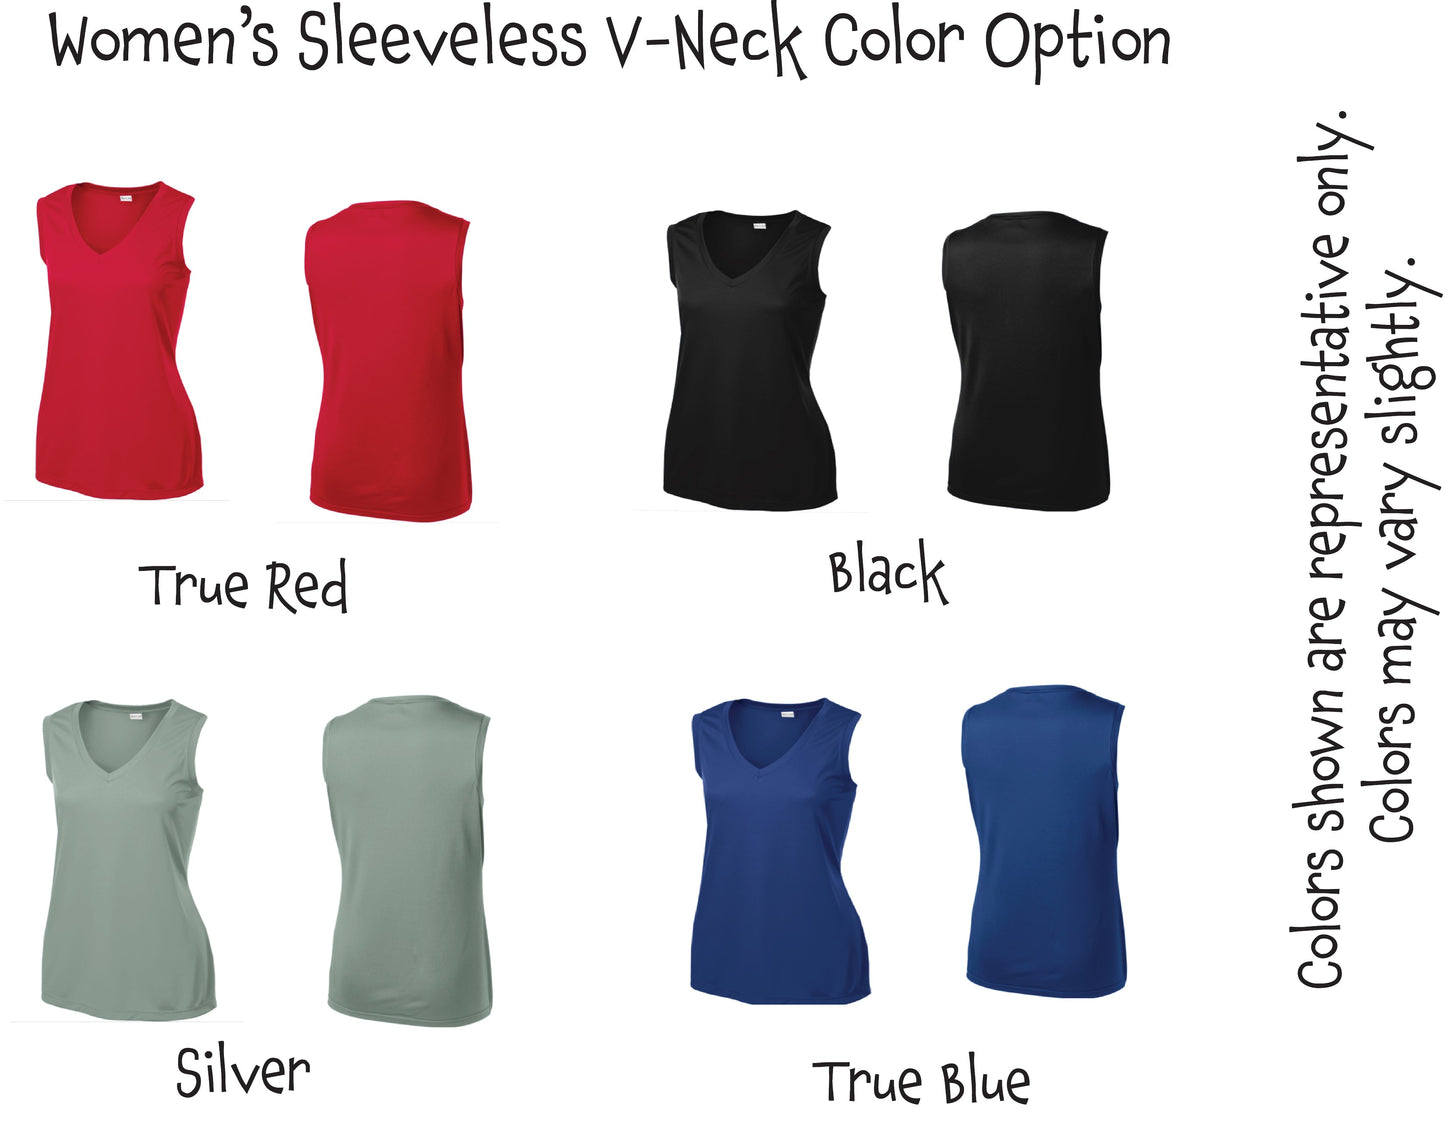 MIne JK Yours (Pickleball Colors Patriotic Stars White or Purple) | Women’s Sleeveless Athletic Shirt | 100% Polyester